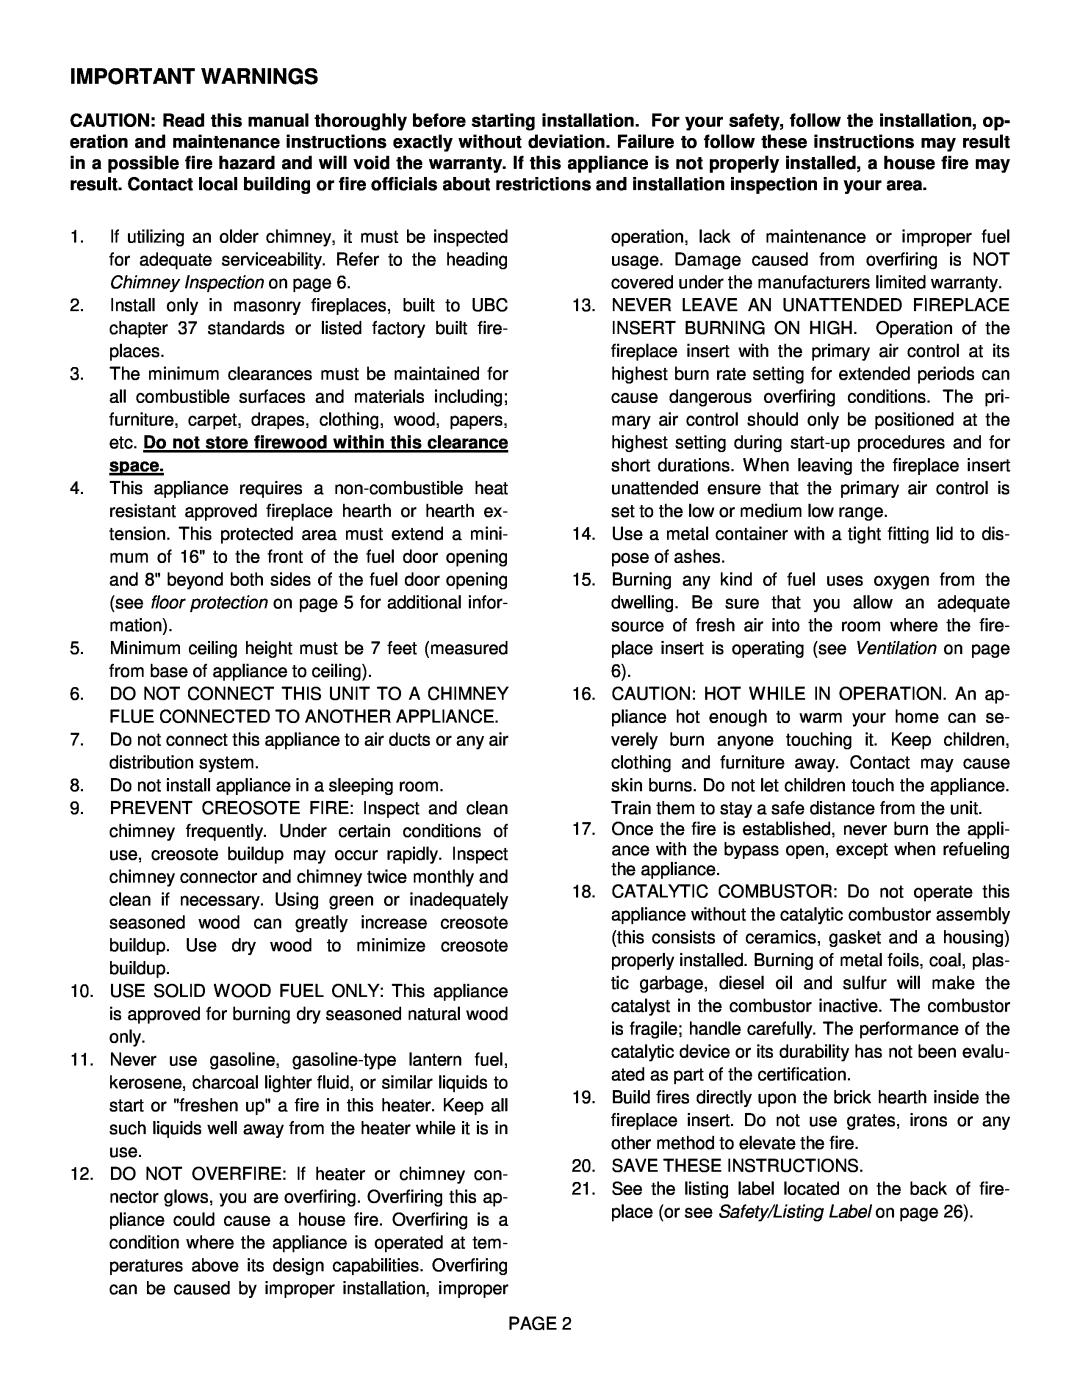 Lennox International Inc BV4000C operation manual Important Warnings 